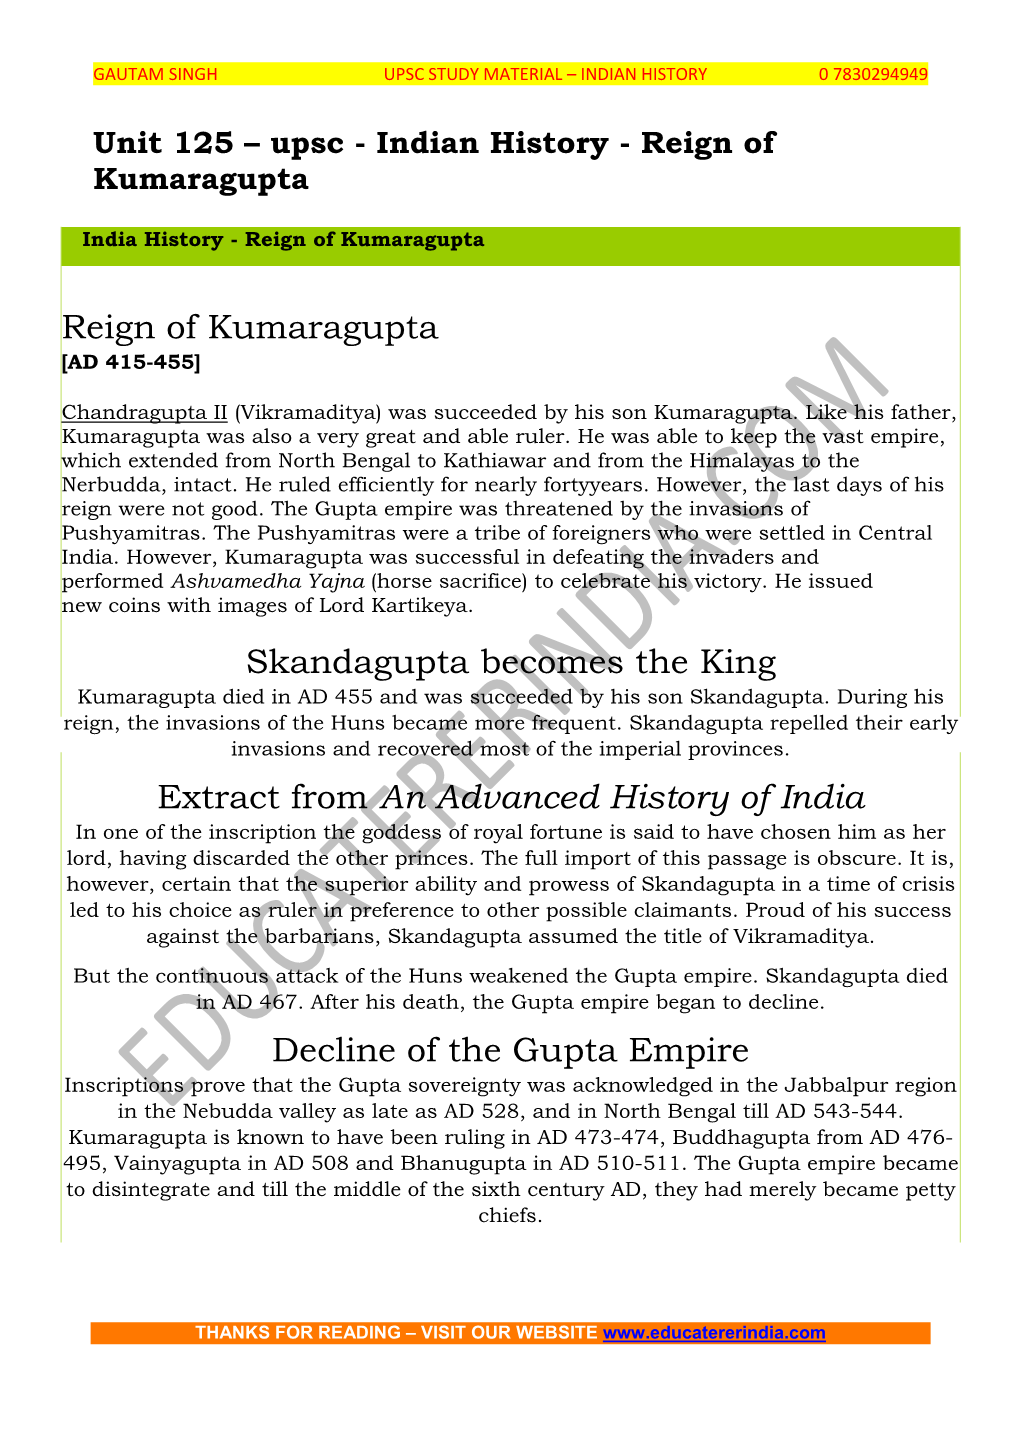 Reign of Kumaragupta